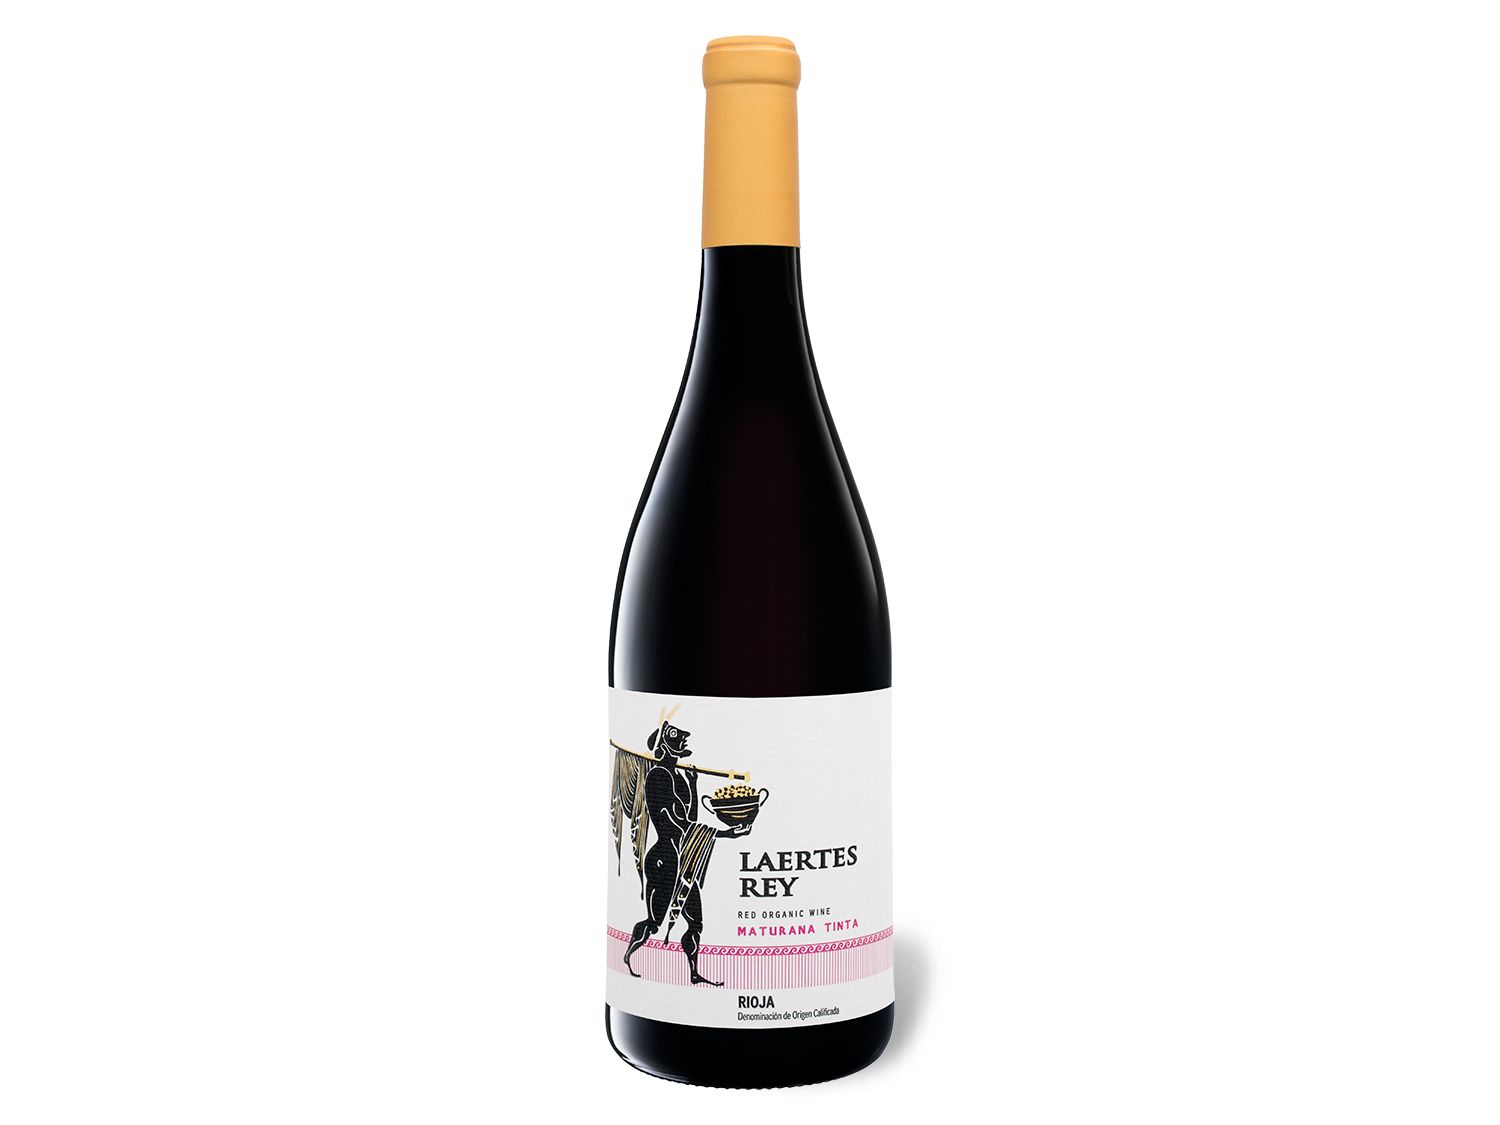 Laertes Rey Maturana Tinta Organic Rioja DOC trocken, Rotwein 2019 Wein & Spirituosen Lidl DE